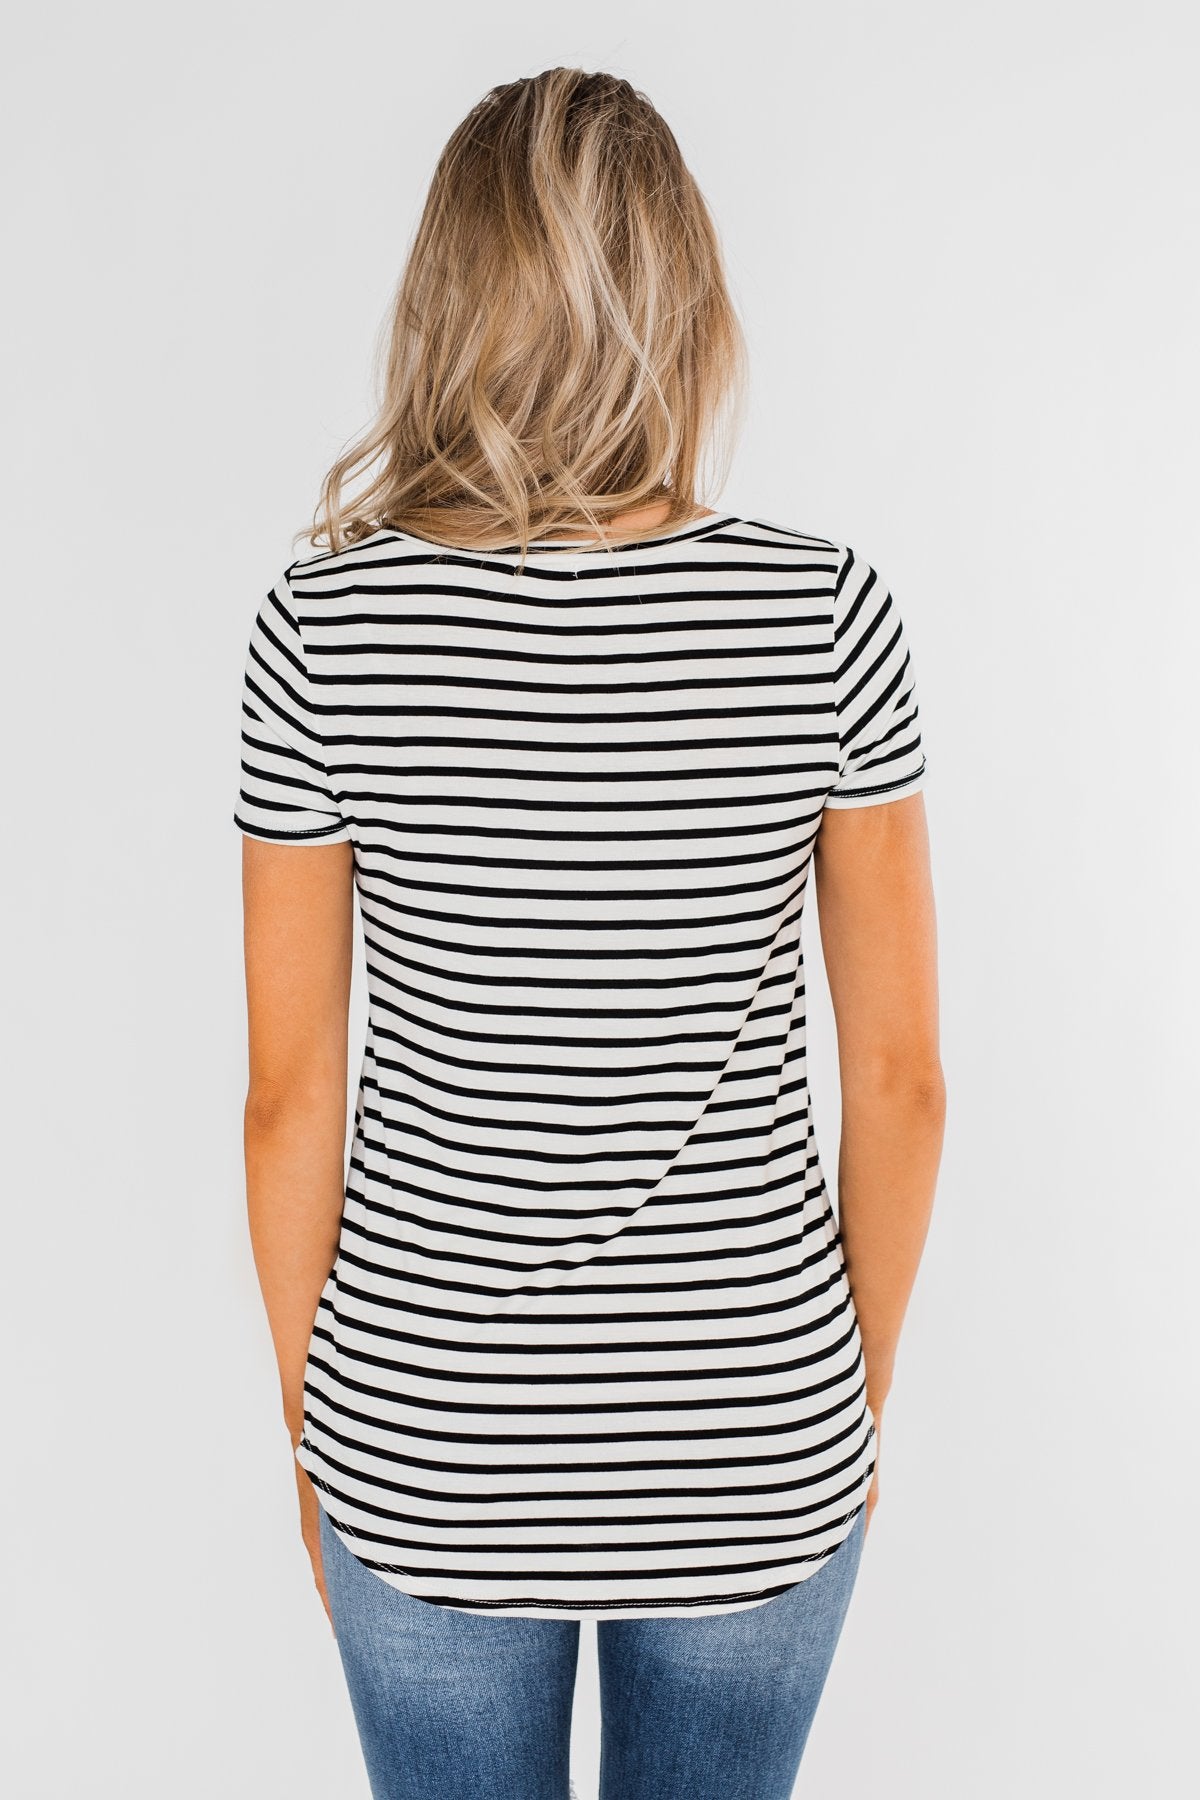 Black & White Striped V-Neck Top